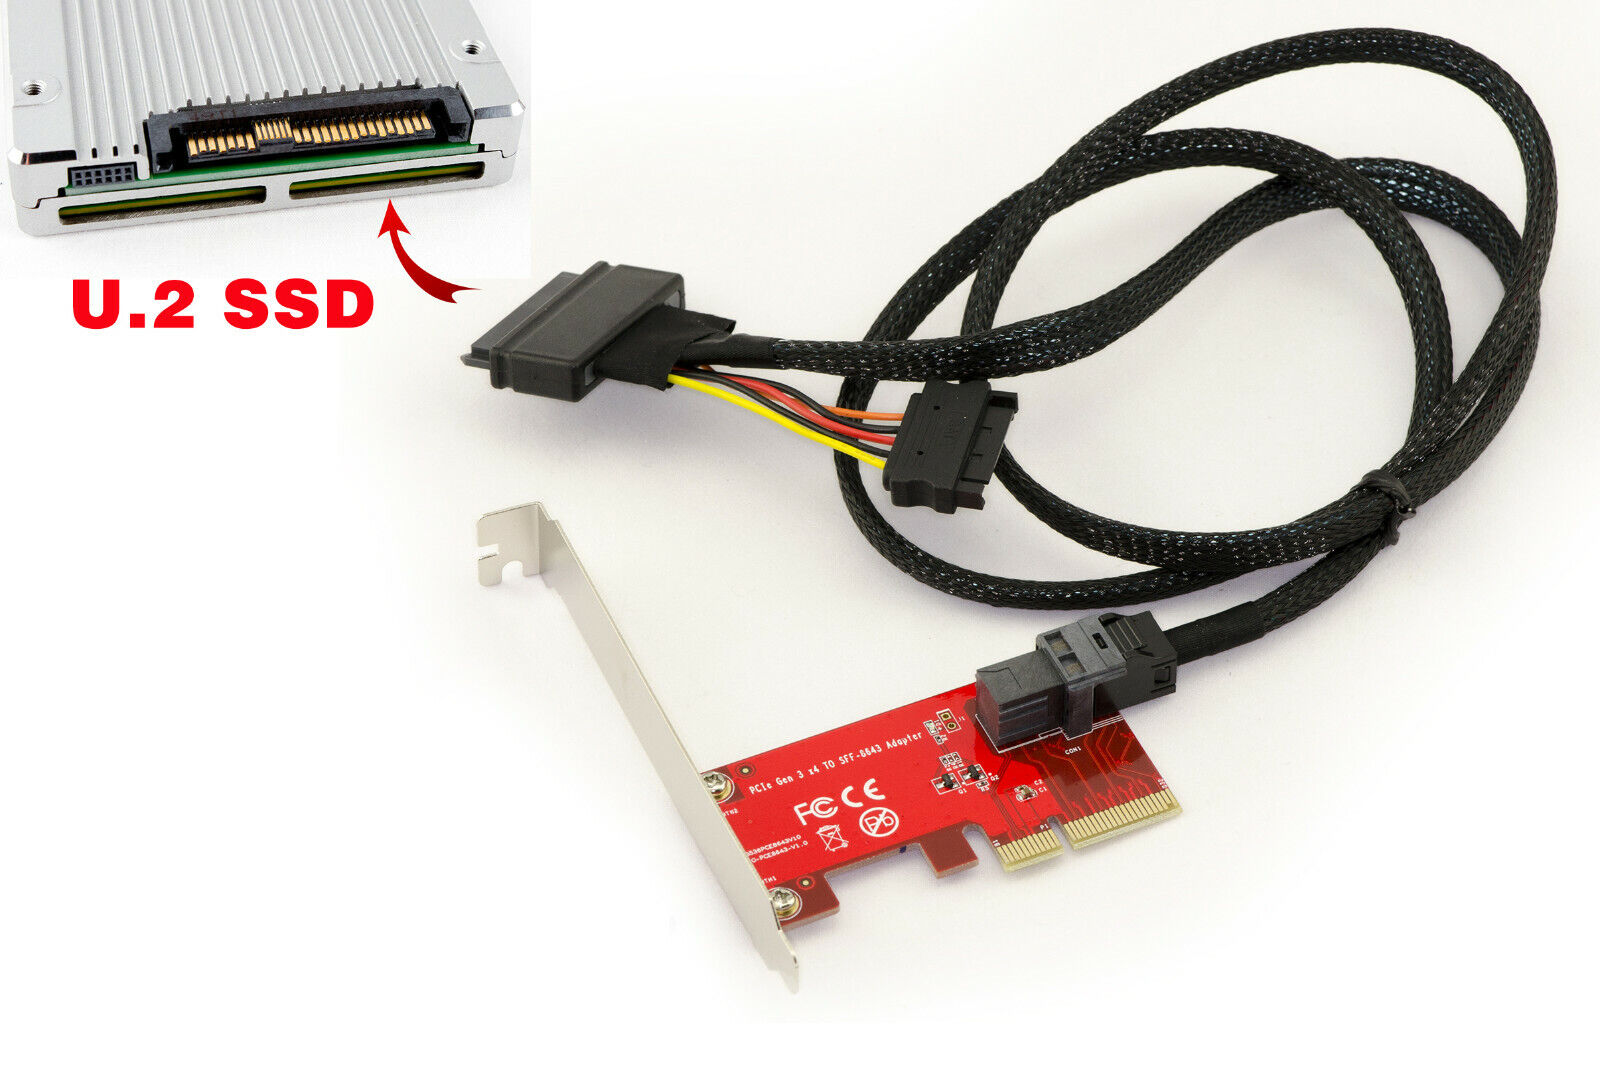 Pcie 4x SSD U.2 Nvme U2 68Pin SFF-8639 - With Cords - High Low Profile